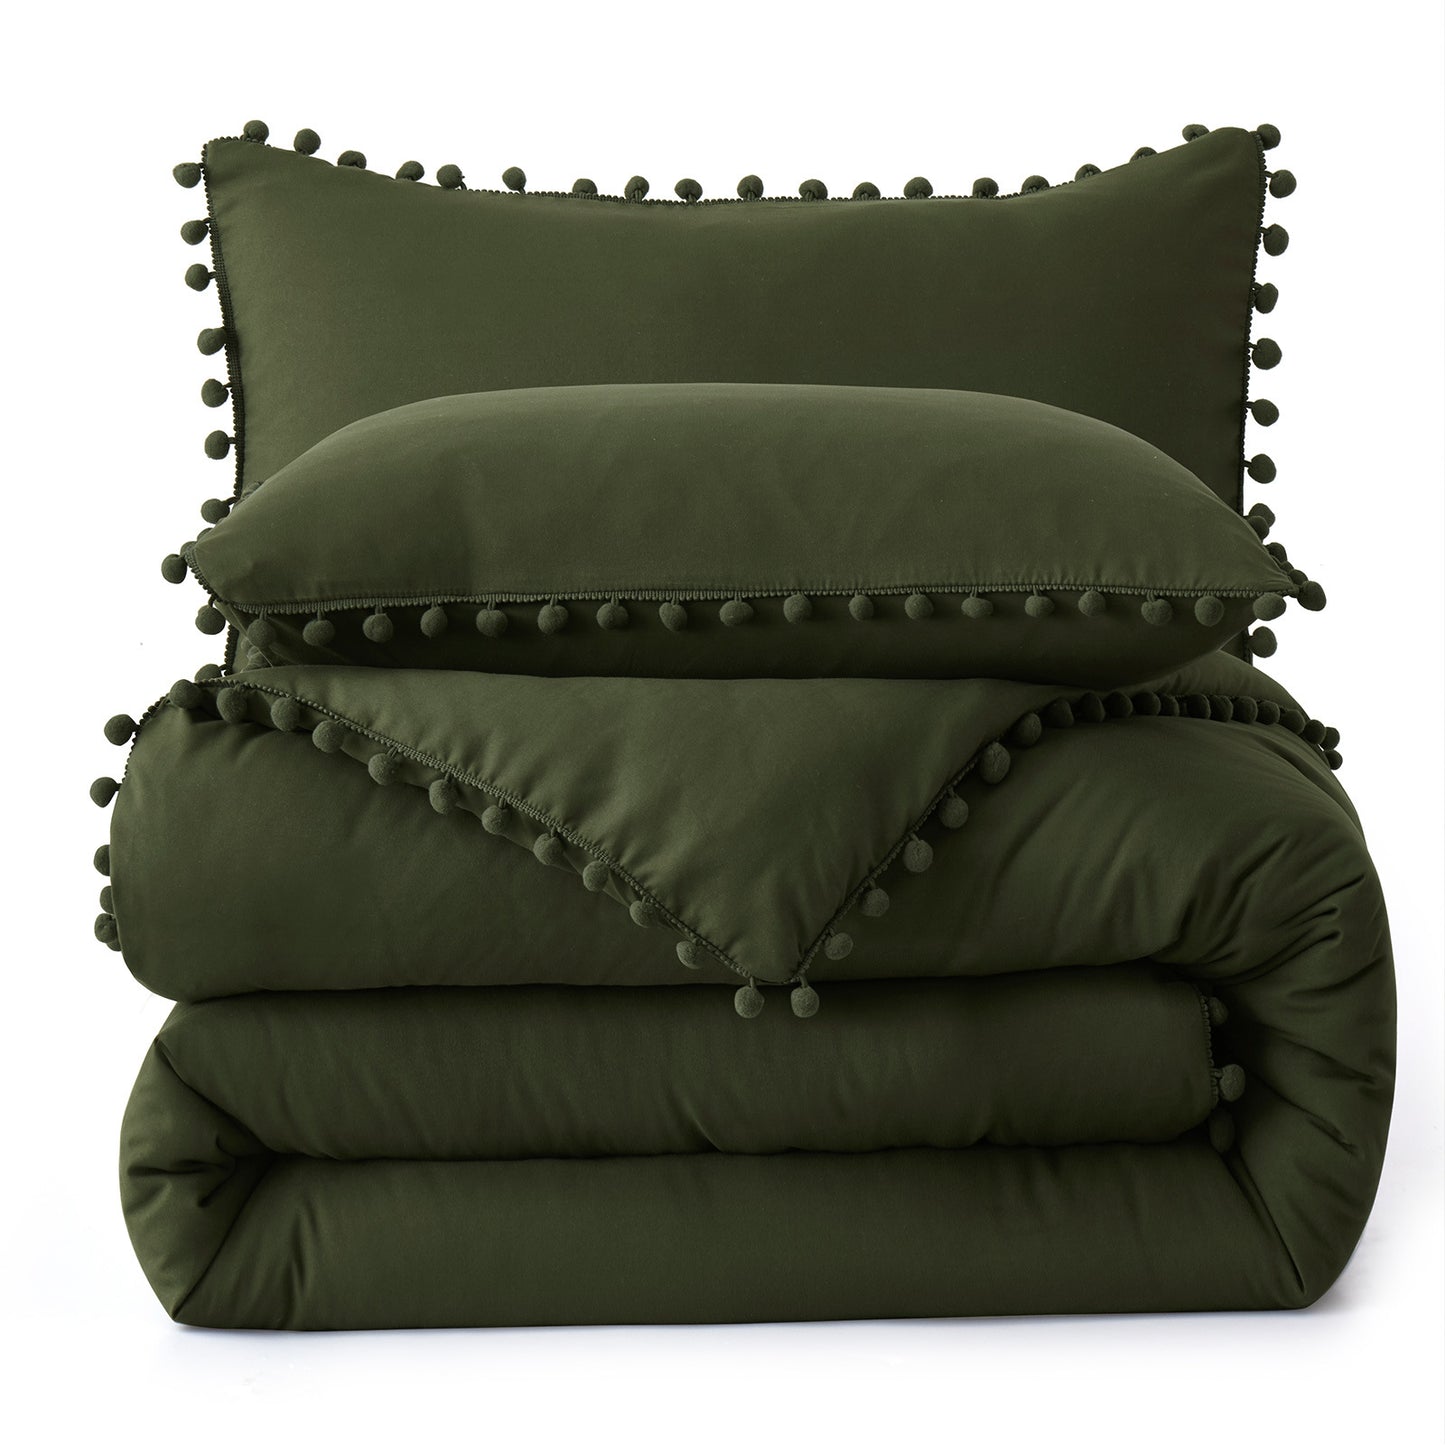 Boho Comforter Set, Boho Bedding set with Pom Poms Fringe Design, 1 Aesthetic Comforter and 2 Pillowshams